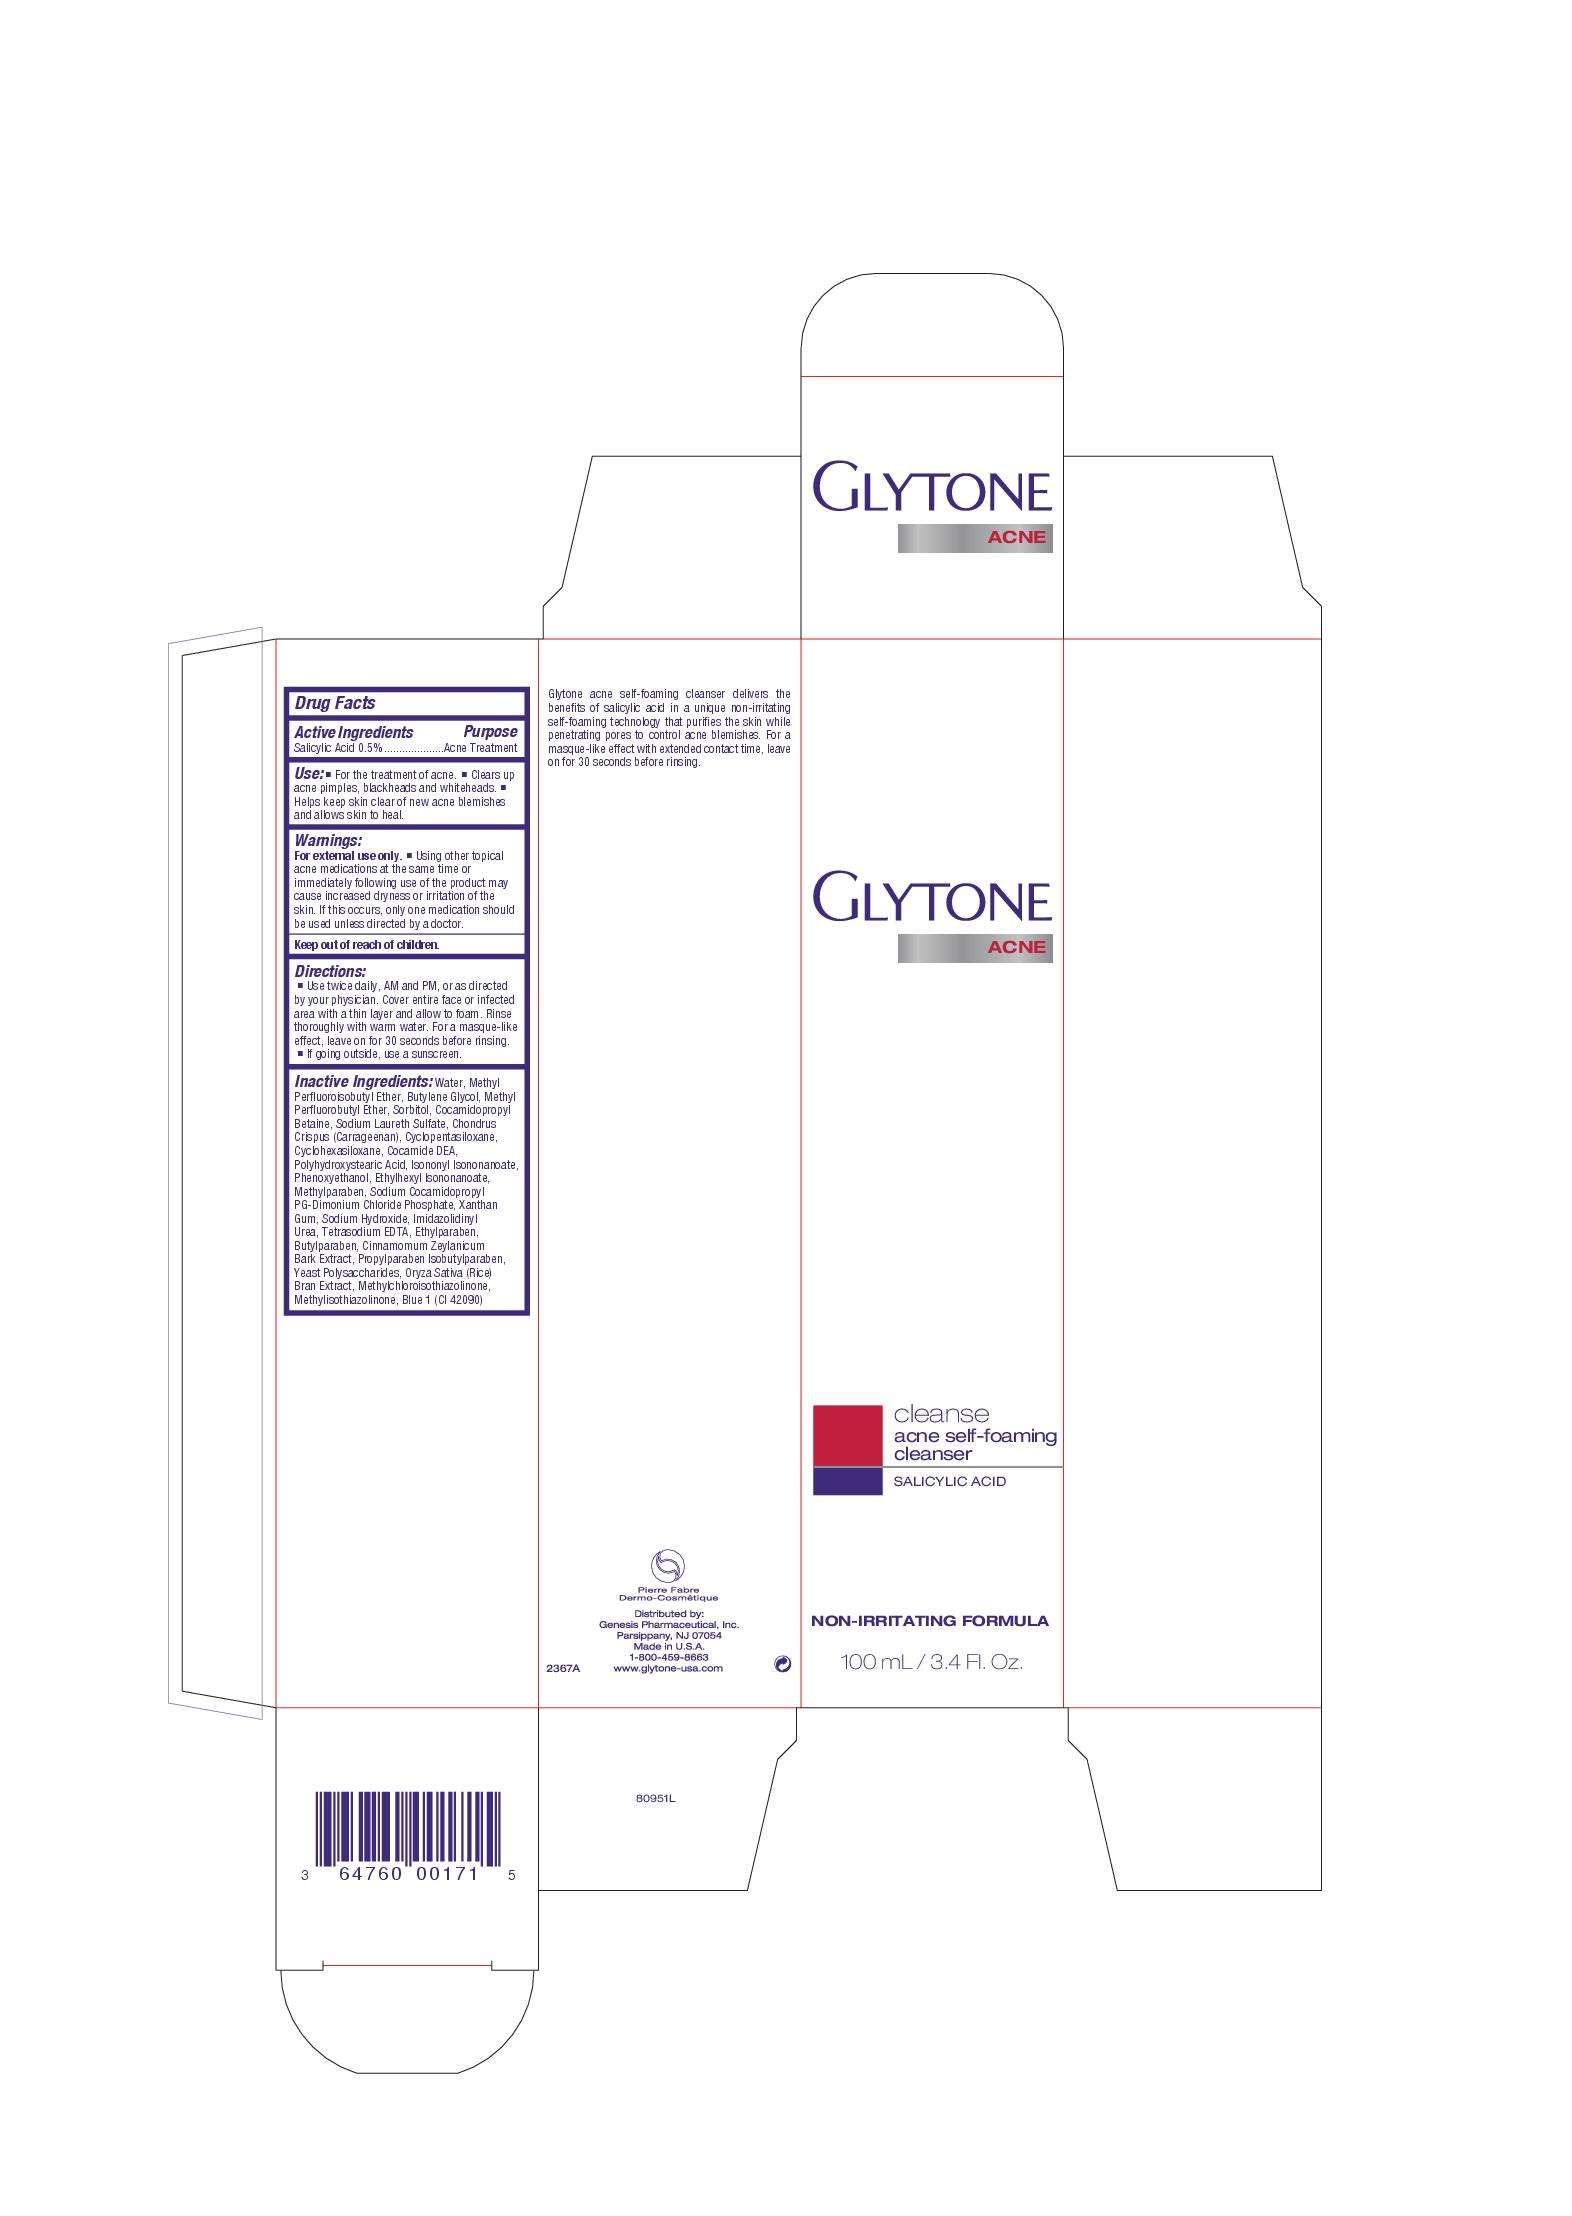 Glytone acne self cleanser